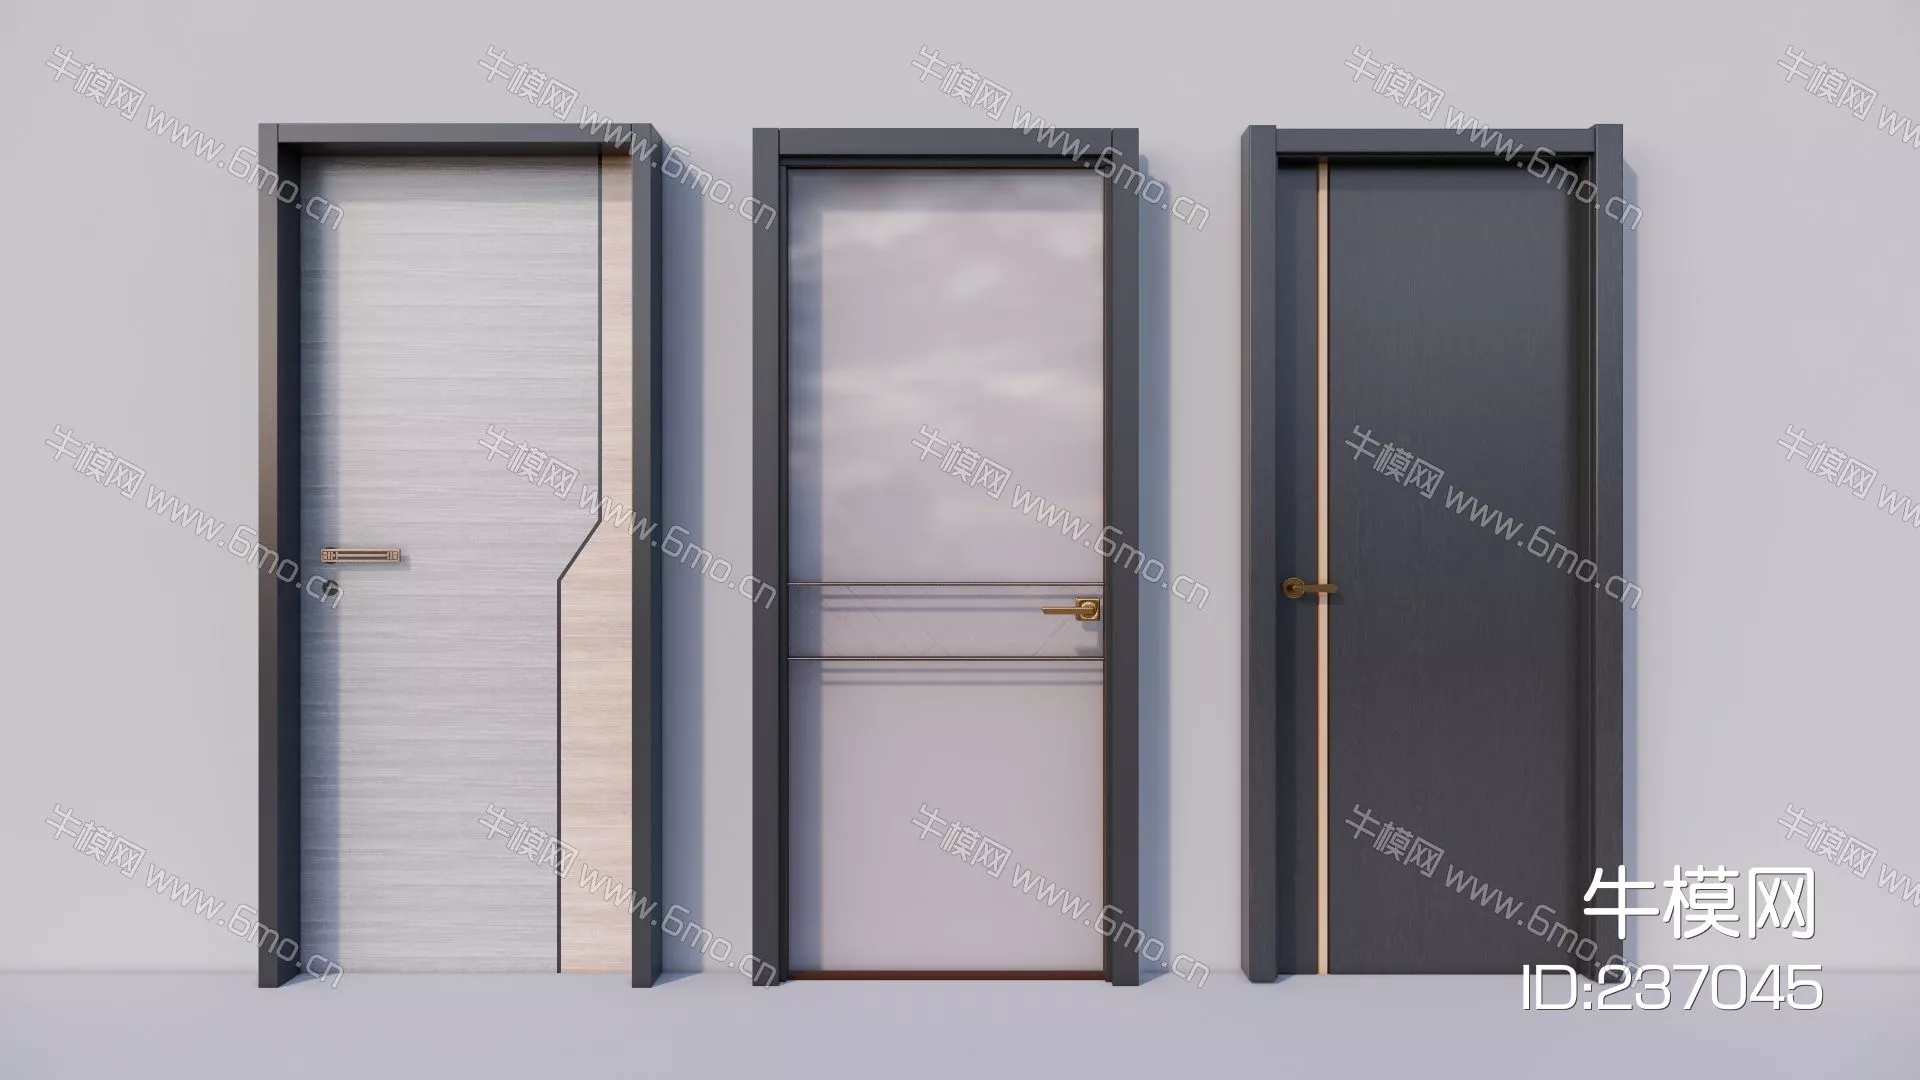 MODERN DOOR AND WINDOWS - SKETCHUP 3D MODEL - ENSCAPE - 237045